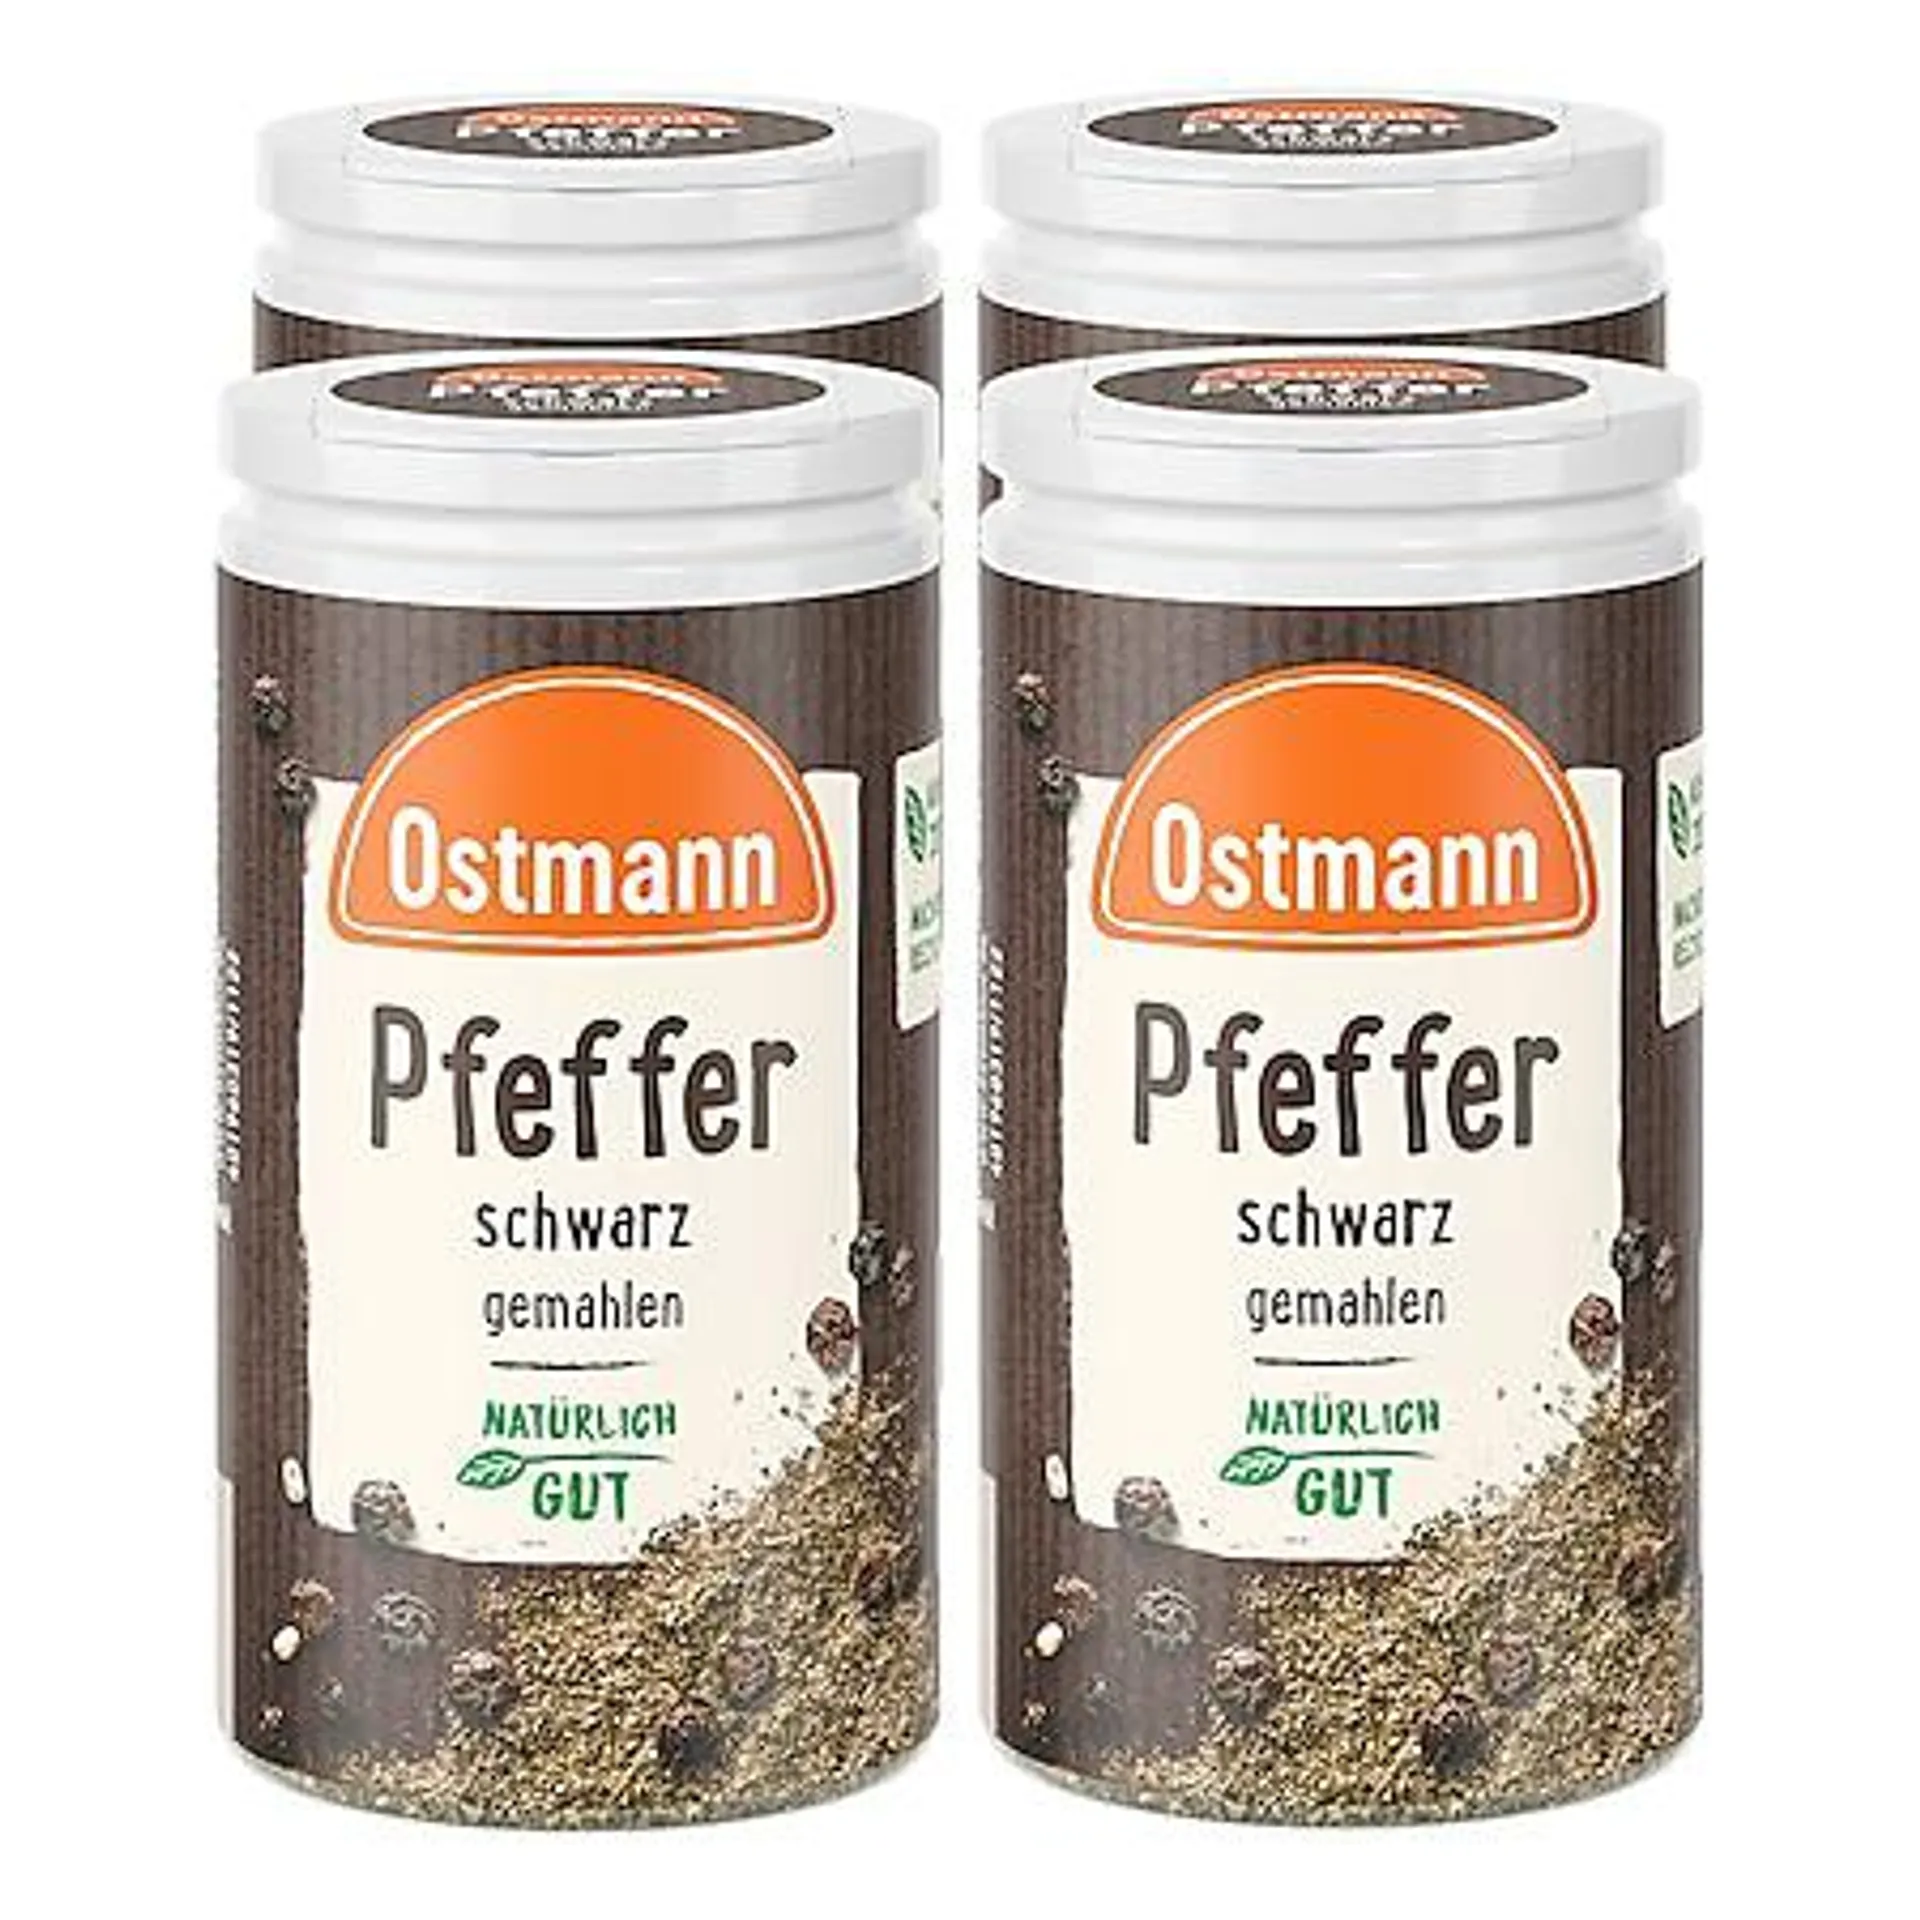 Ostmann Pfeffer schwarz gemahlen Streuer 40 g, 4er Pack